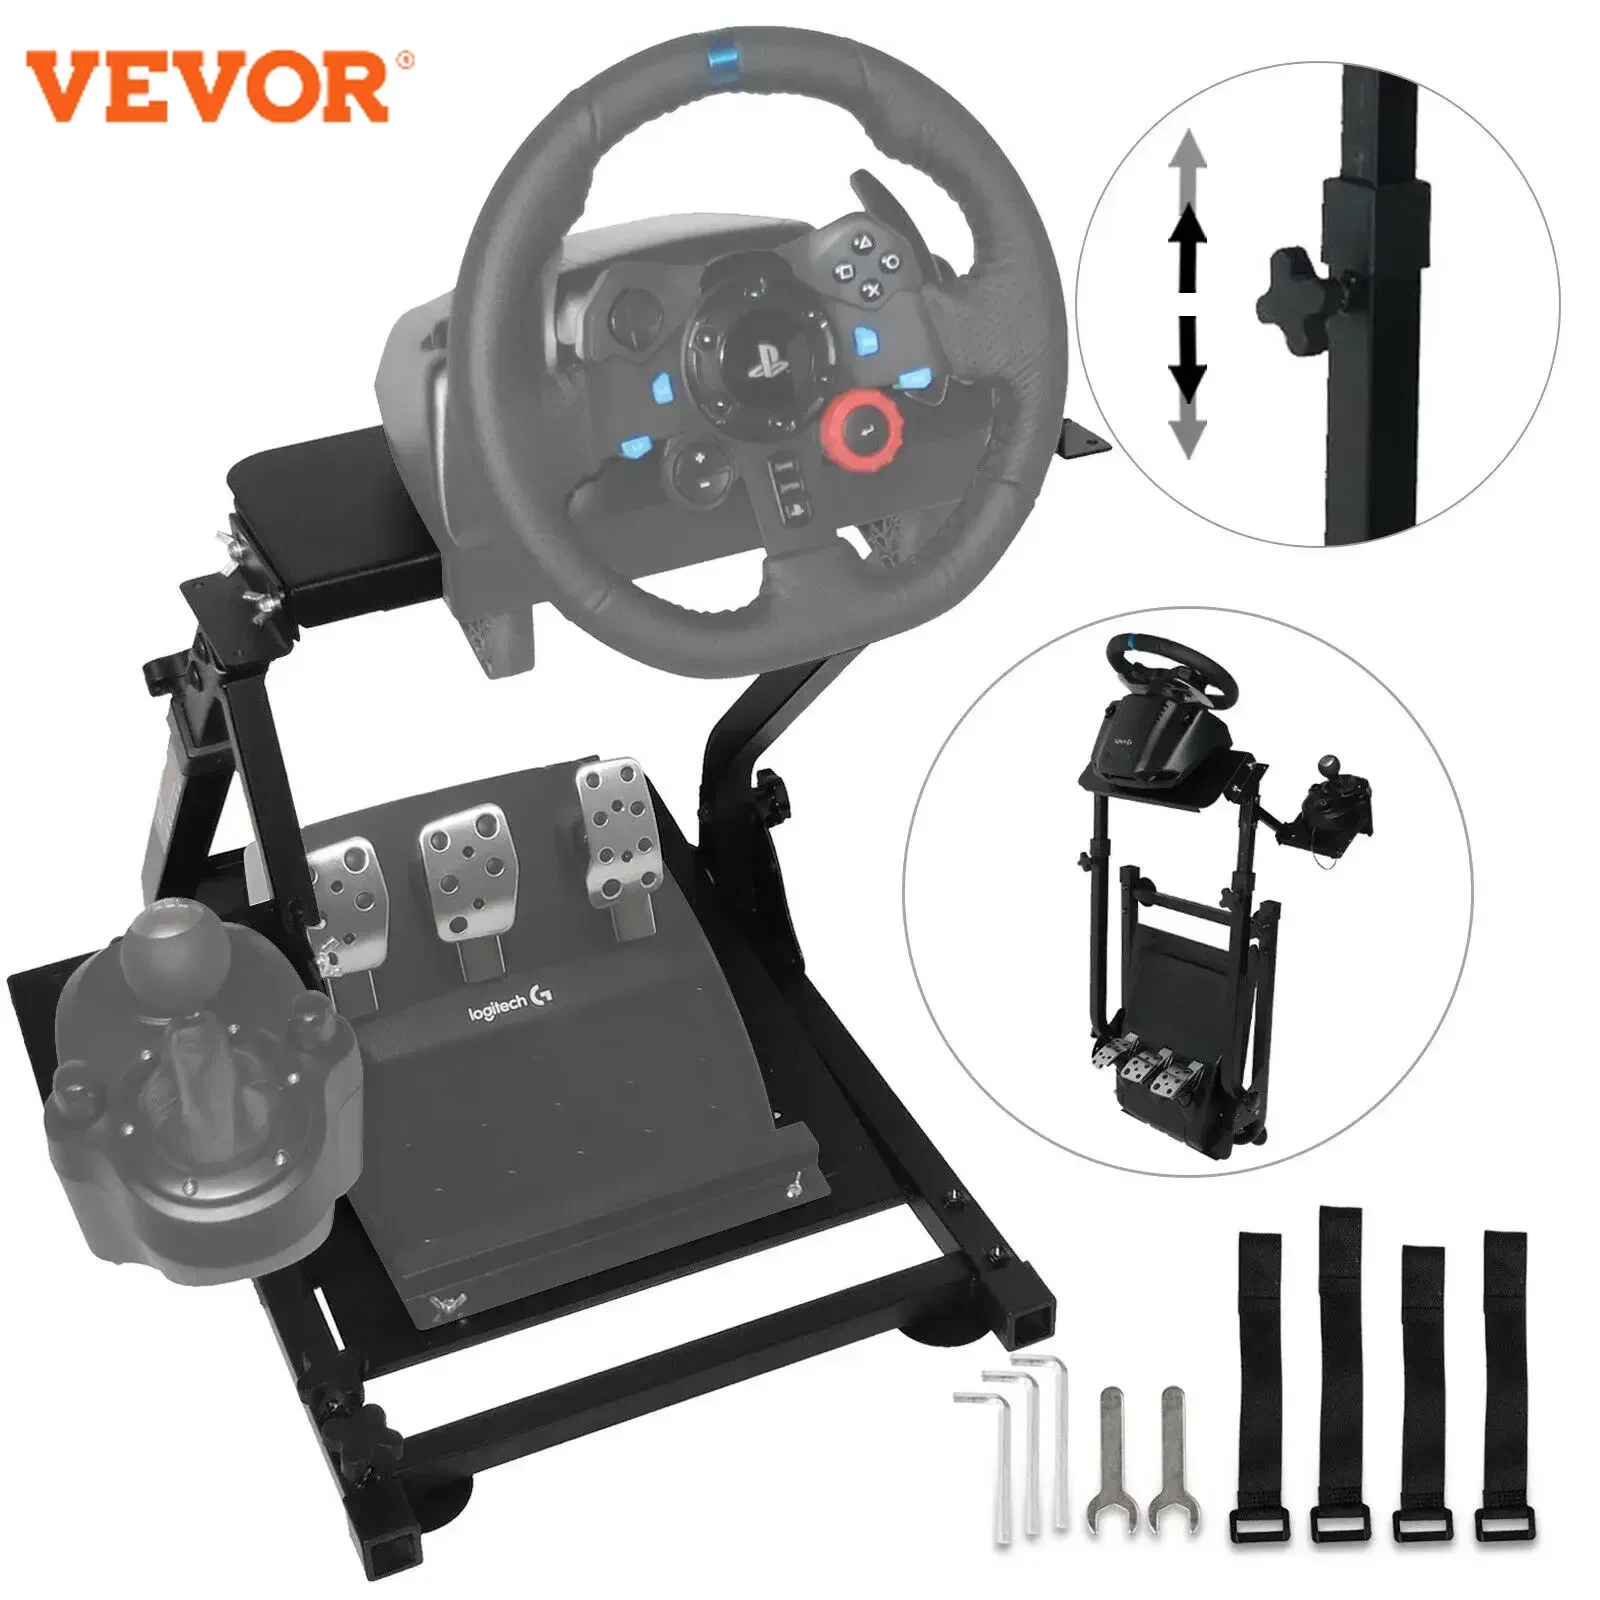 

VEVOR Racing Simulator Self-Career Steering Wheel Stand for Logitech G25 G27 G29 and G920 Folding Steering Wheel Stand